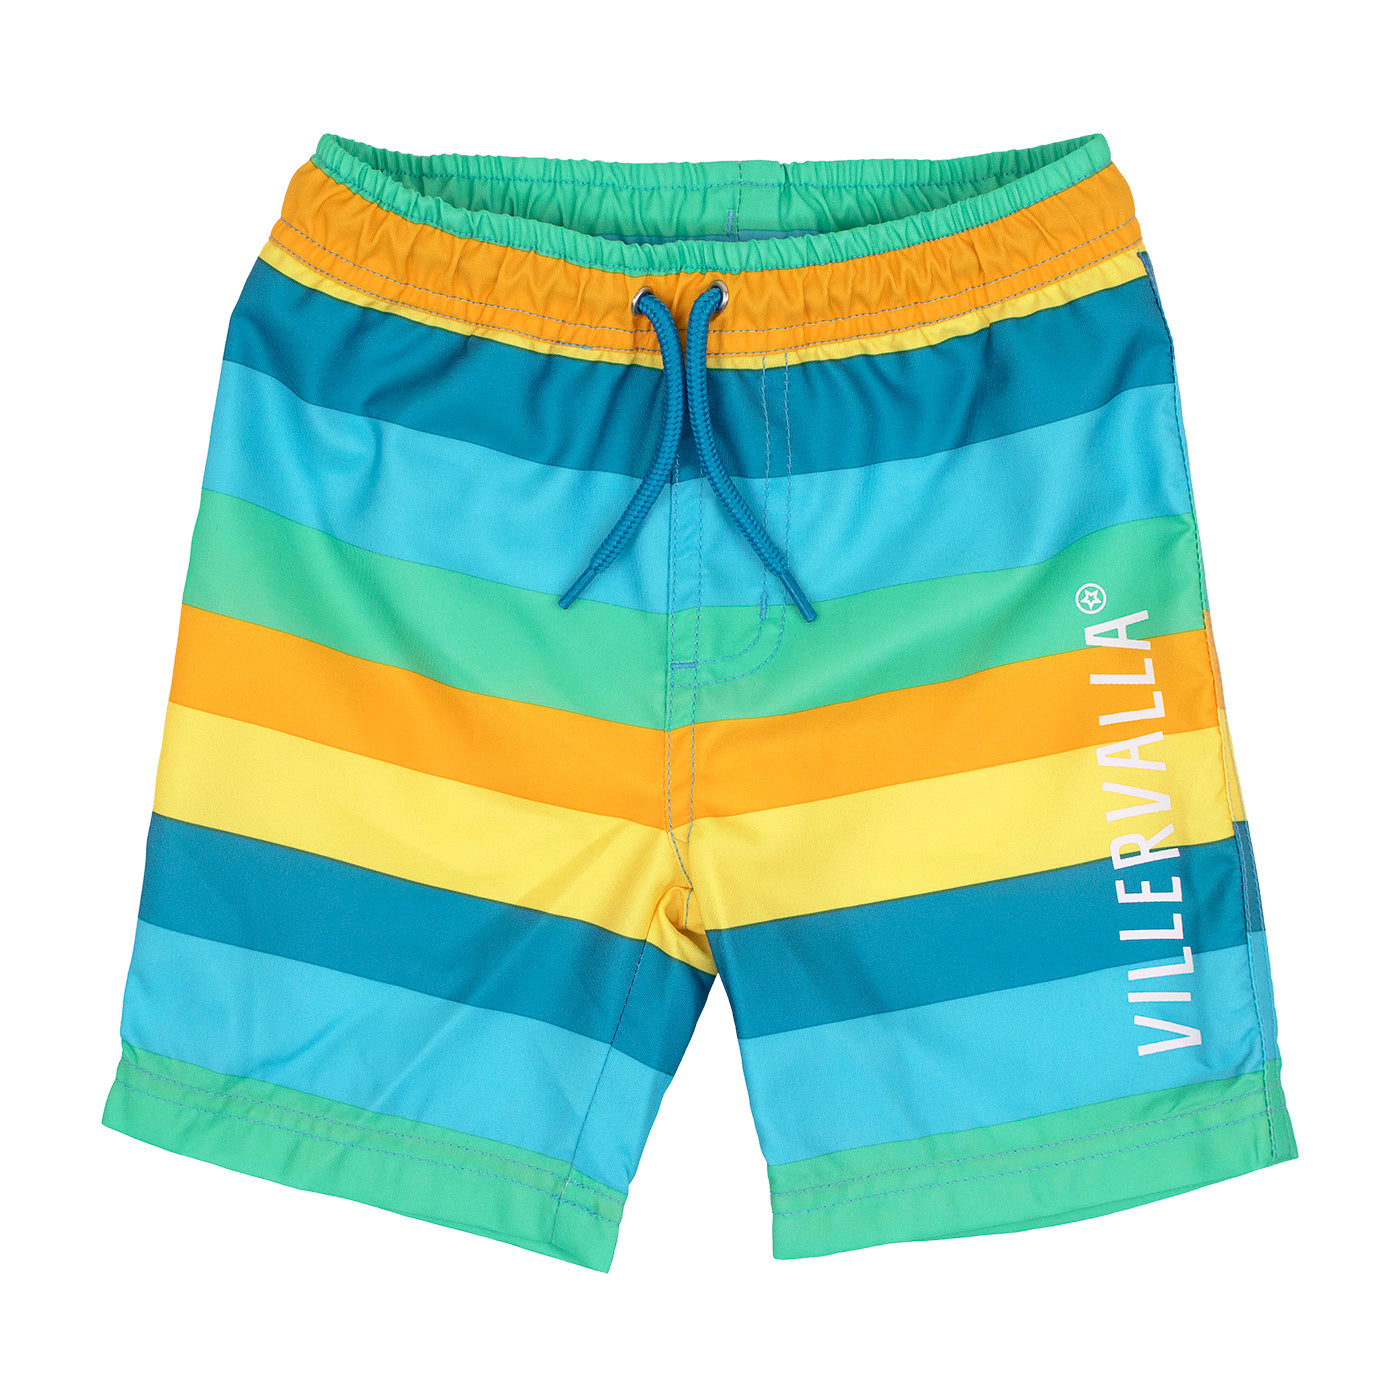 Multistripe Surf Shorts in Beach - 2 Left Size 2-4 years-Villervalla-Modern Rascals